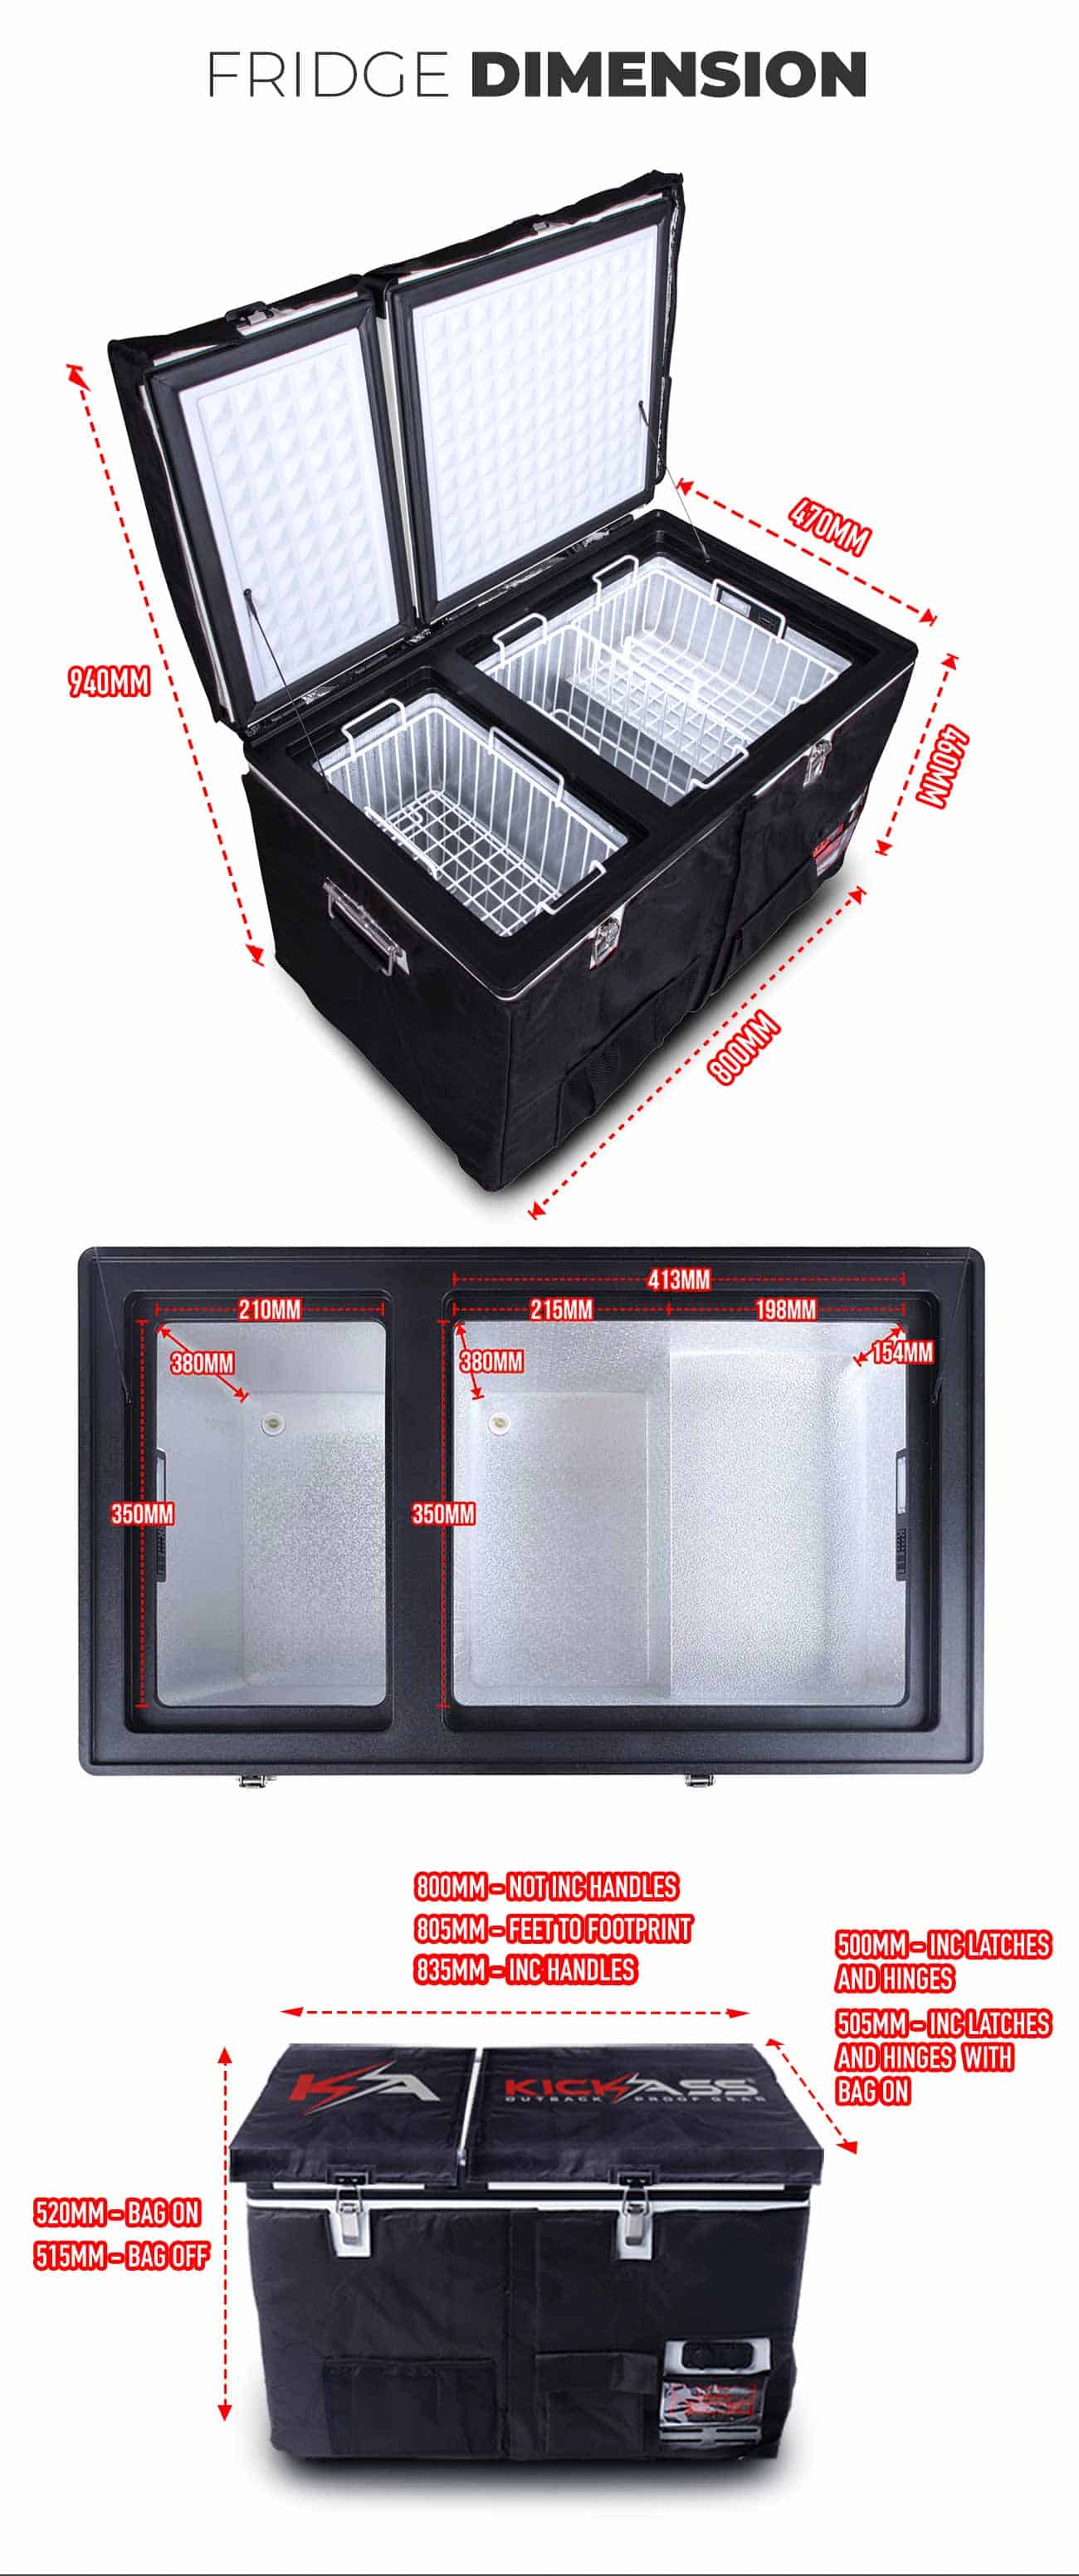 KICKASS Portable Fridge Freezer Dual Zone 75L - Dimensions